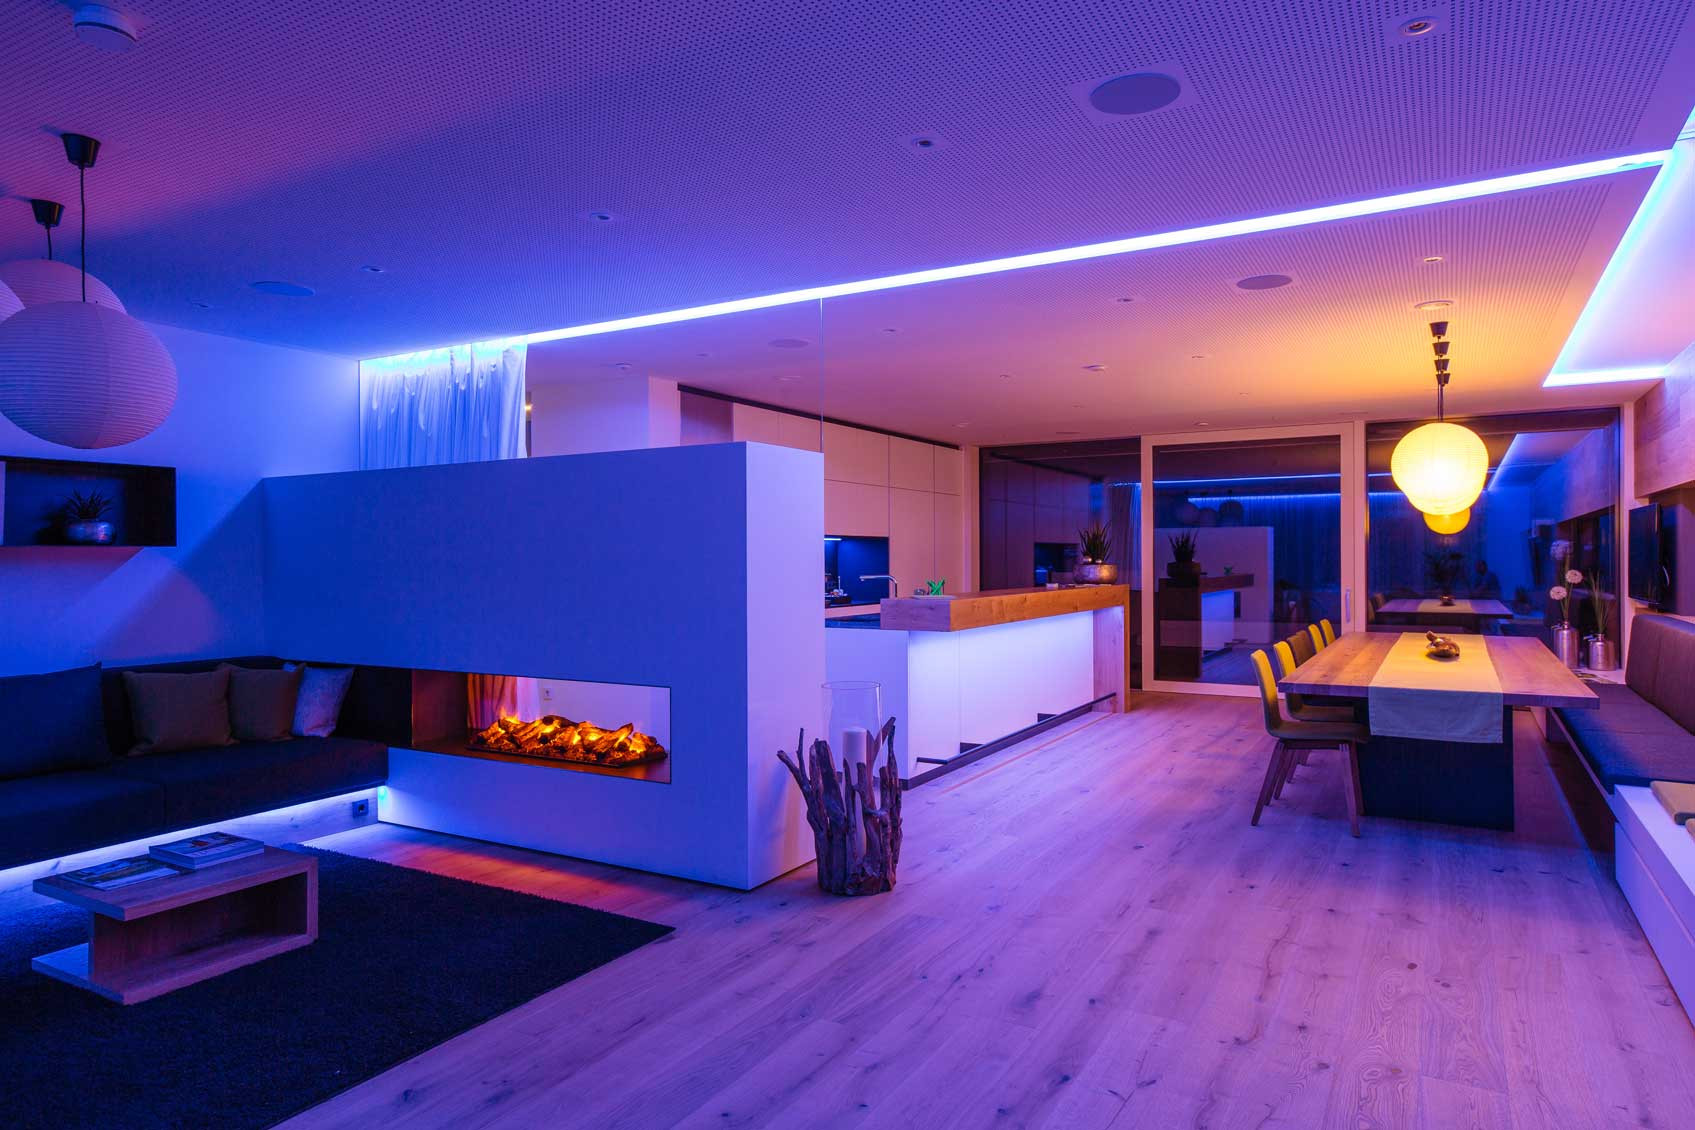 24 Inspirational Led Strip Lights Living Room Home Decoration Style